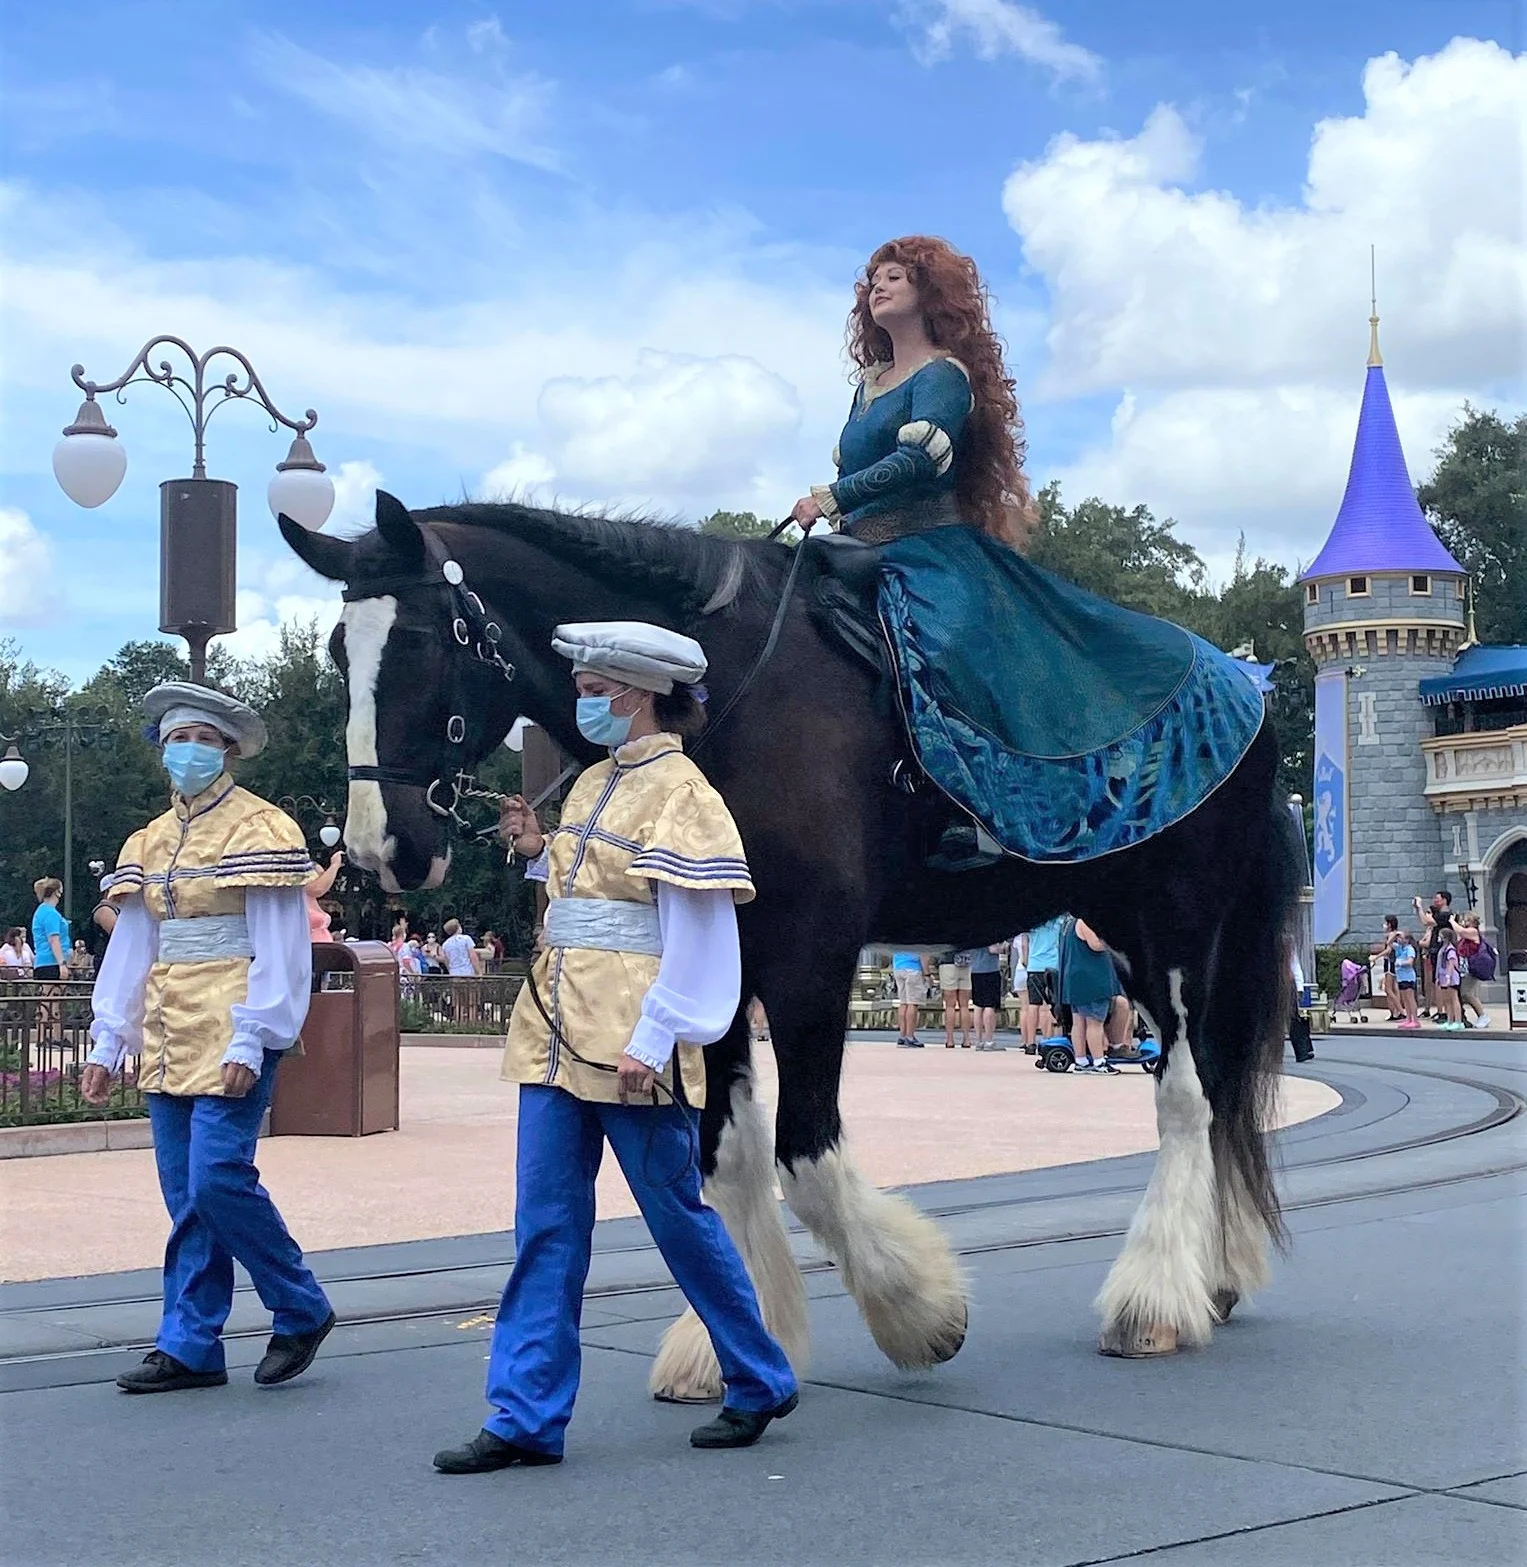 merida riding a horse in magic kingdom